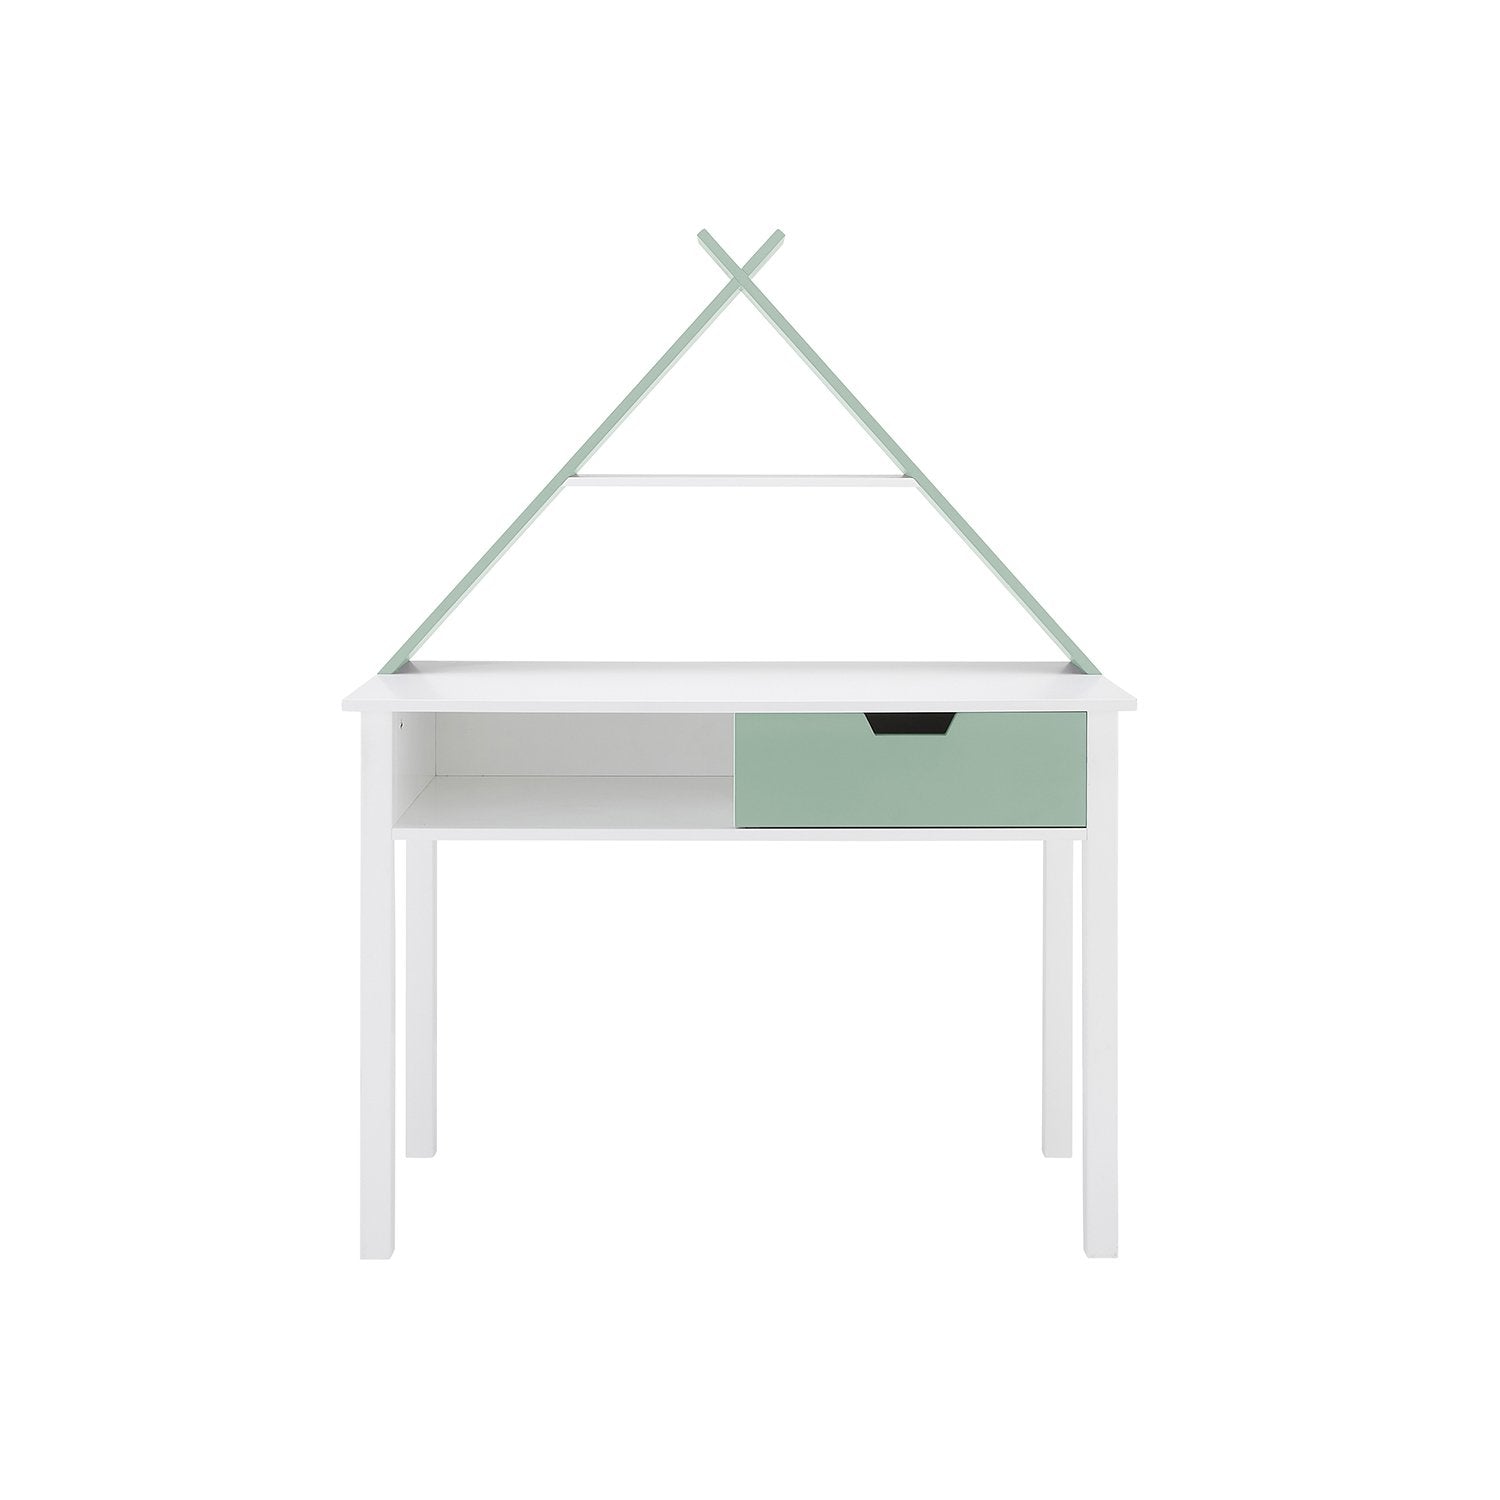 Children's Tipi Style Desk - White/Green